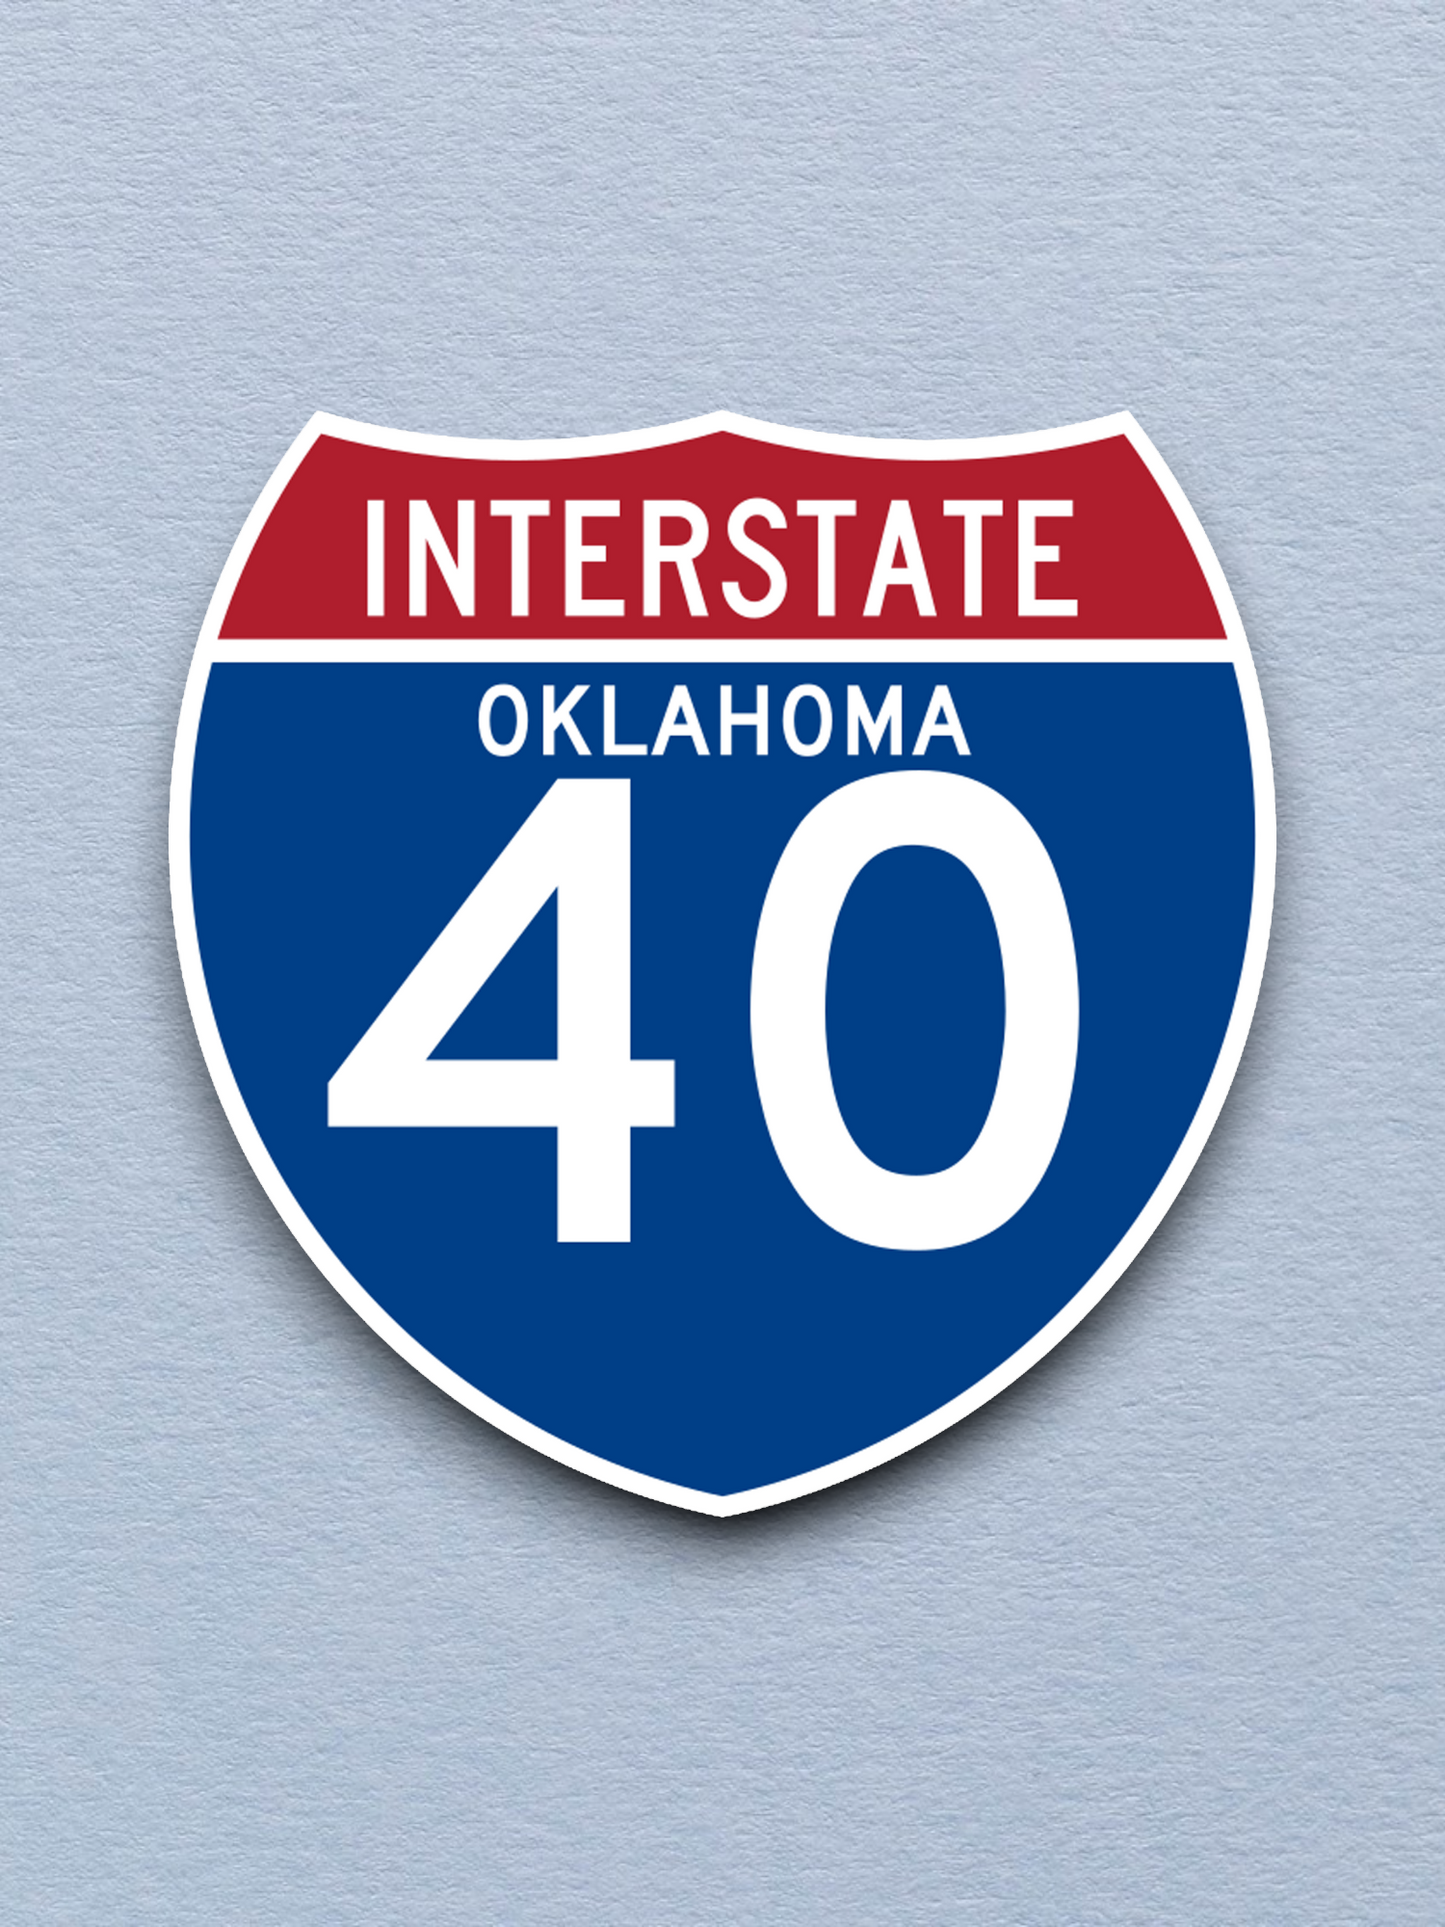 Interstate I-40 Oklahoma - Road Sign Sticker